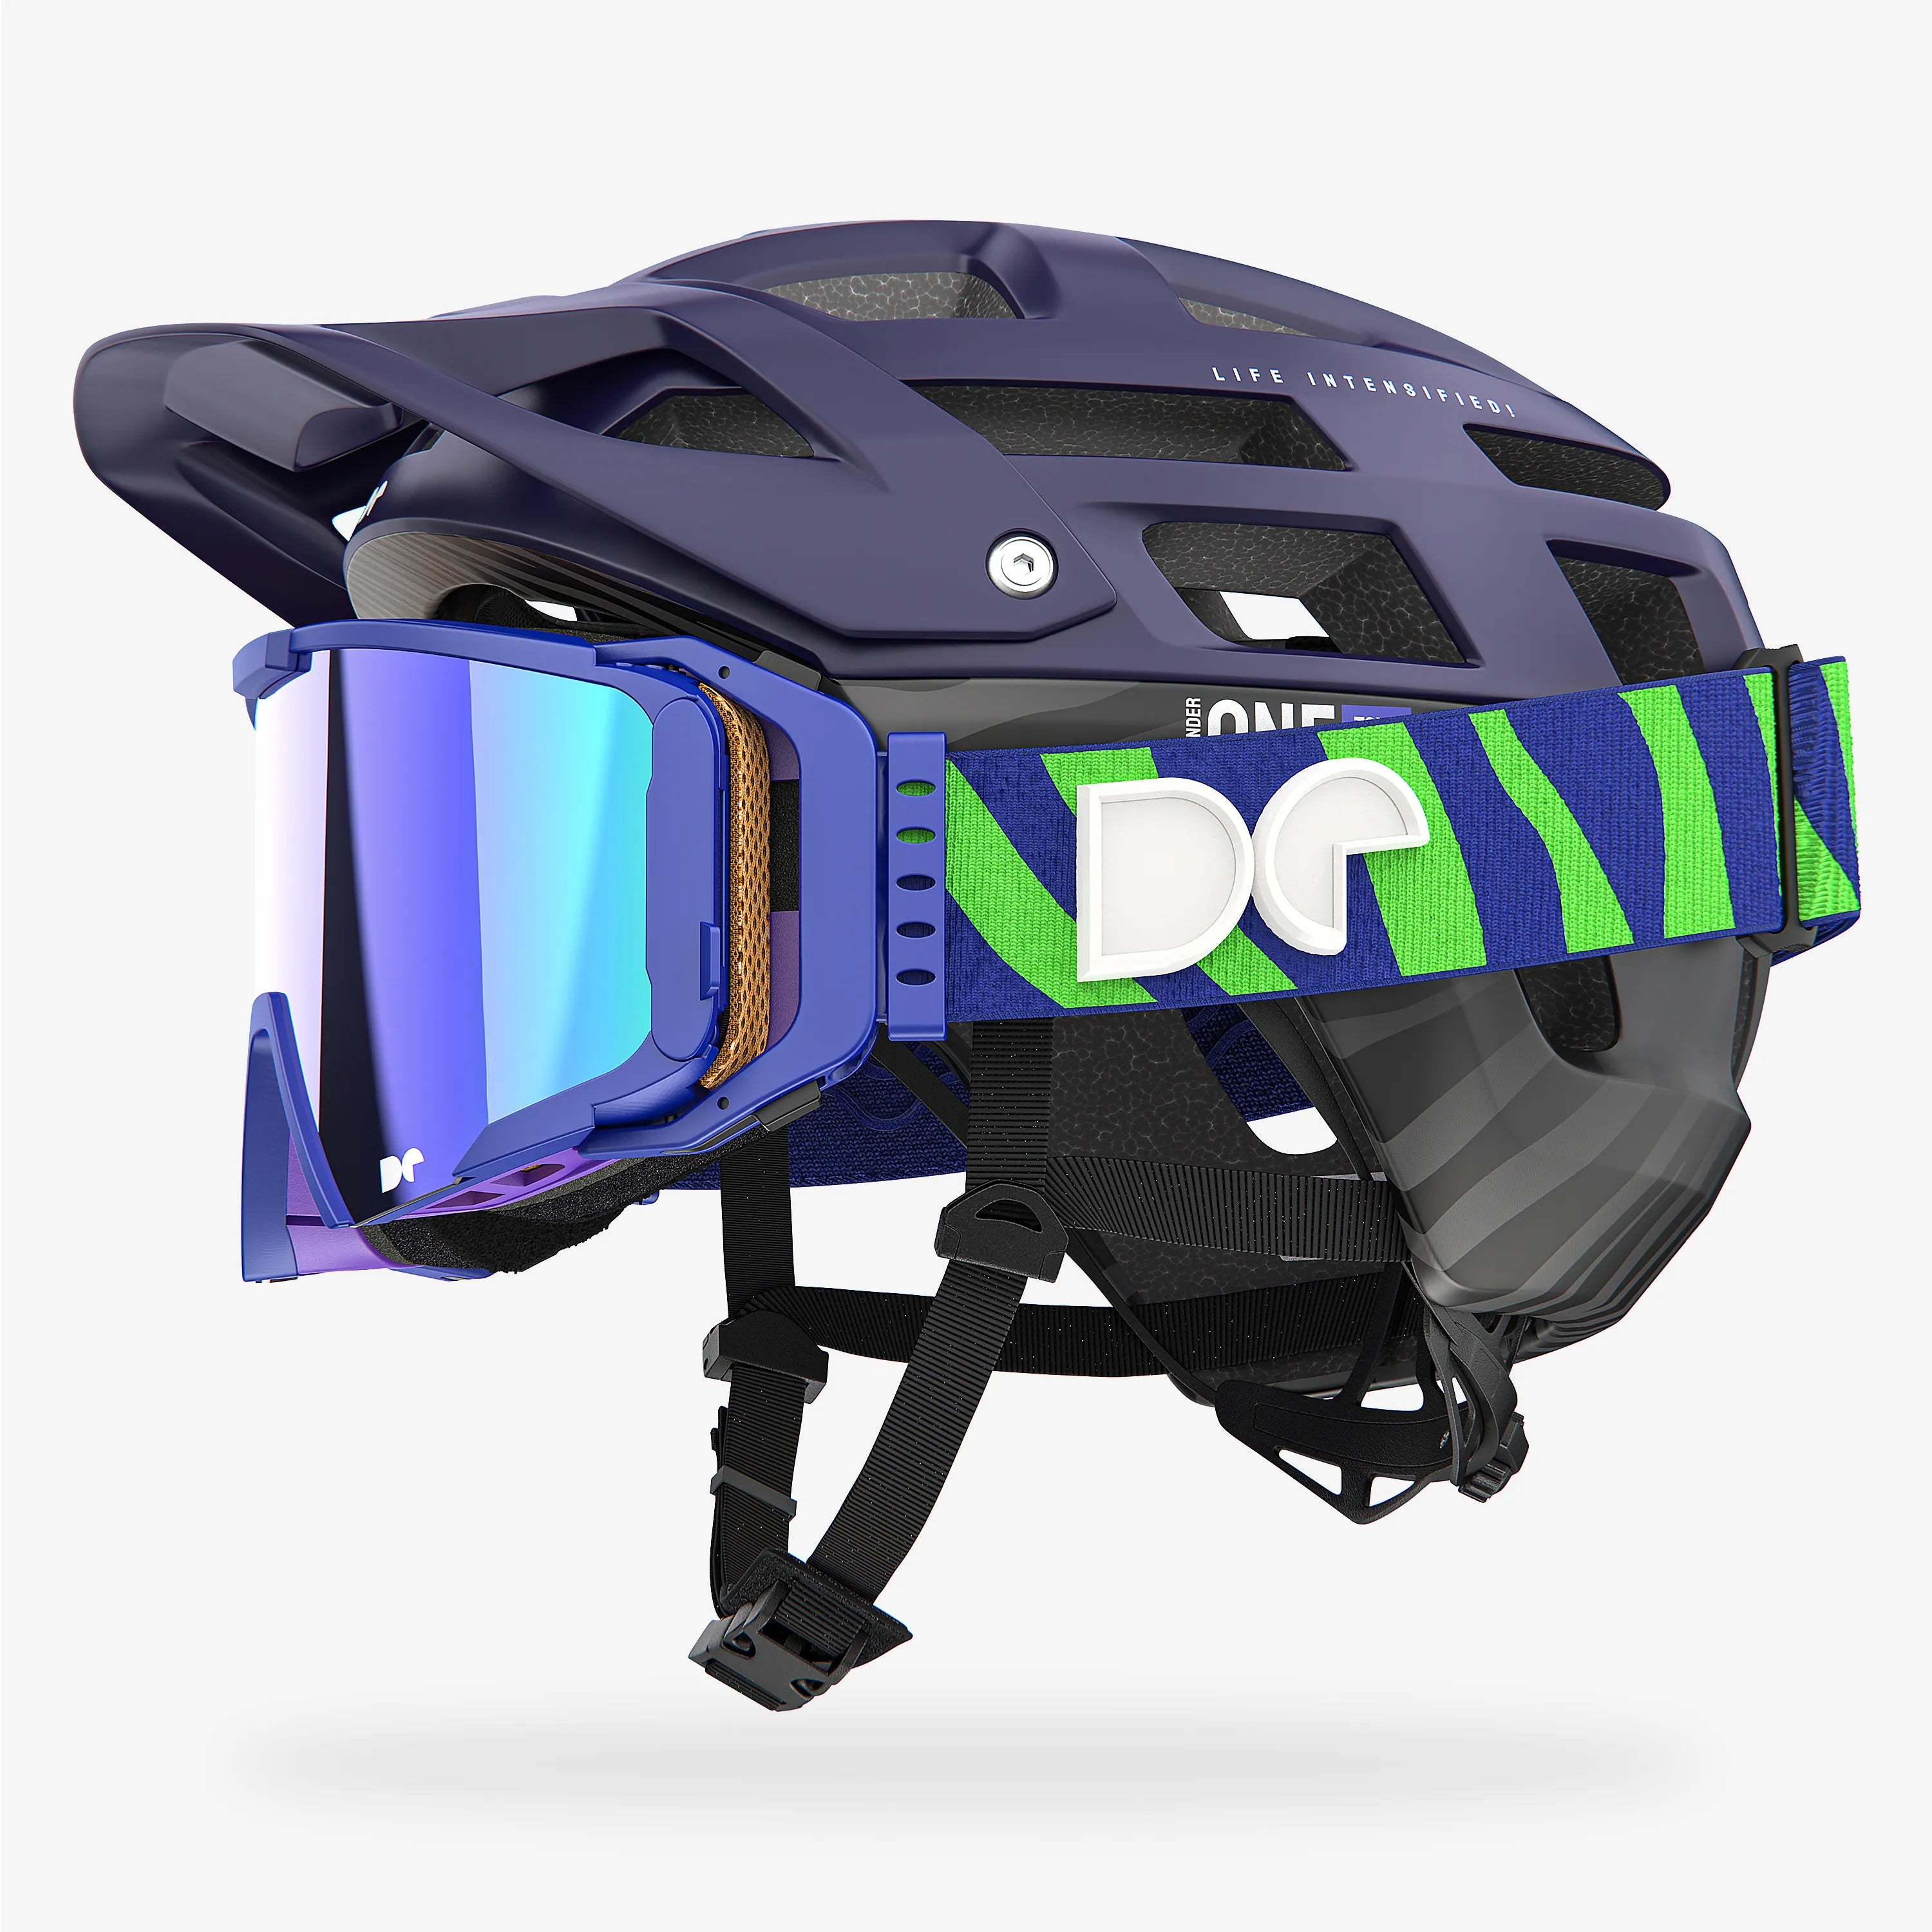 Defender One Tour Deep Purple Mountain Bike Helmet + Sporter Boostup All Road Goggle ディープパープルマウンテンバイクヘルメット + MXゴーグル